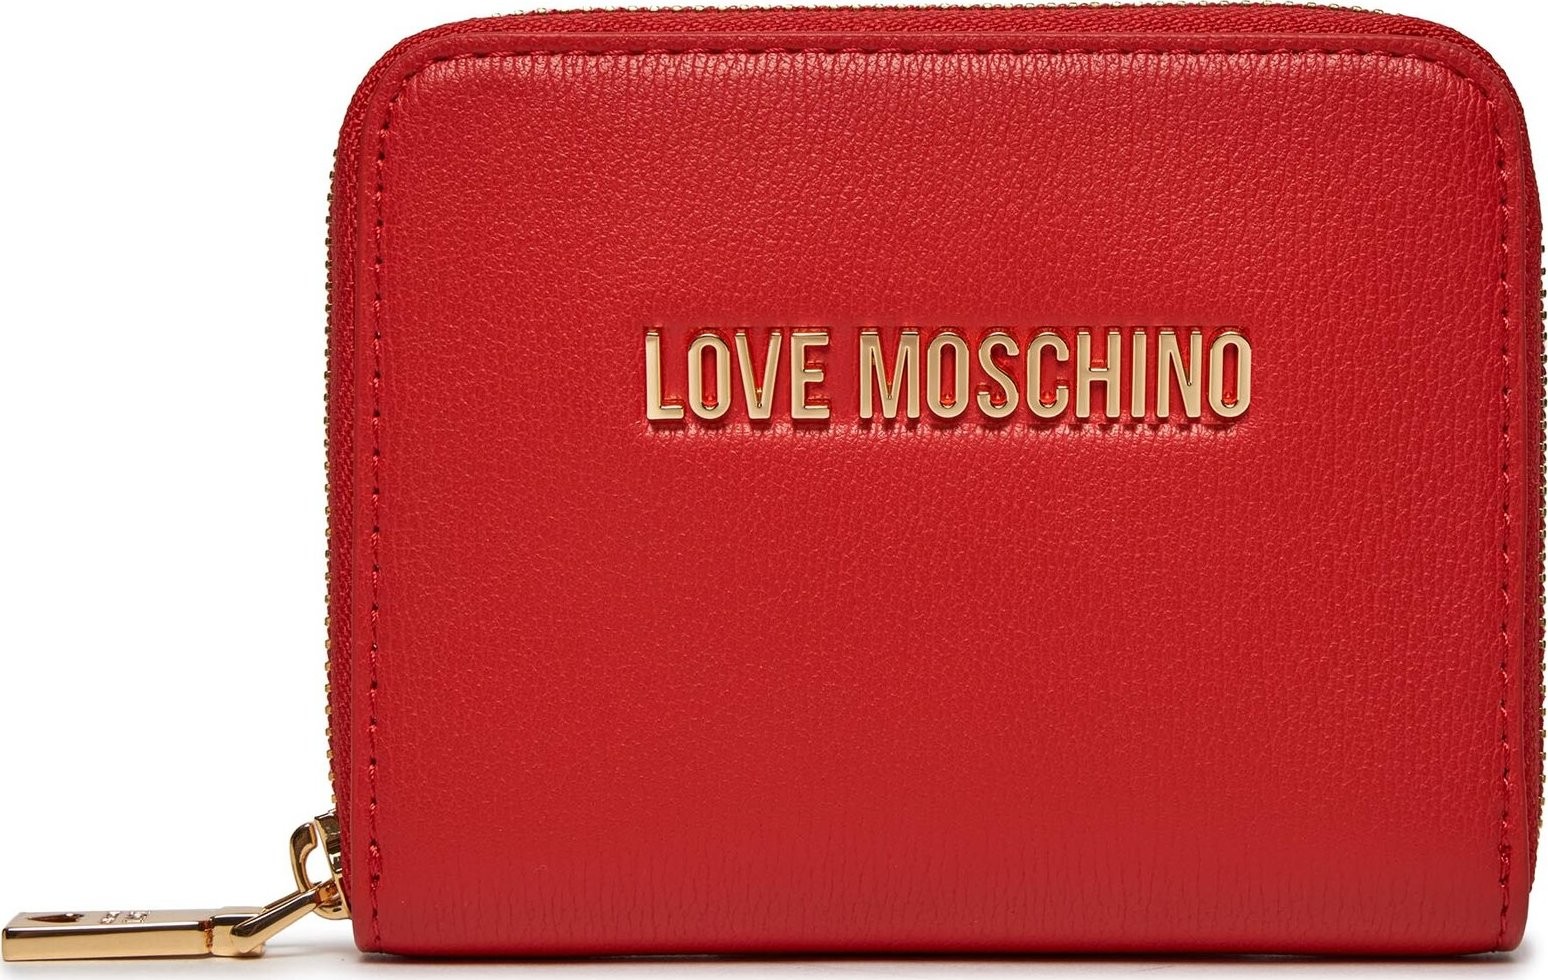 Malá dámská peněženka LOVE MOSCHINO JC5702PP1ILD0500 Rosso